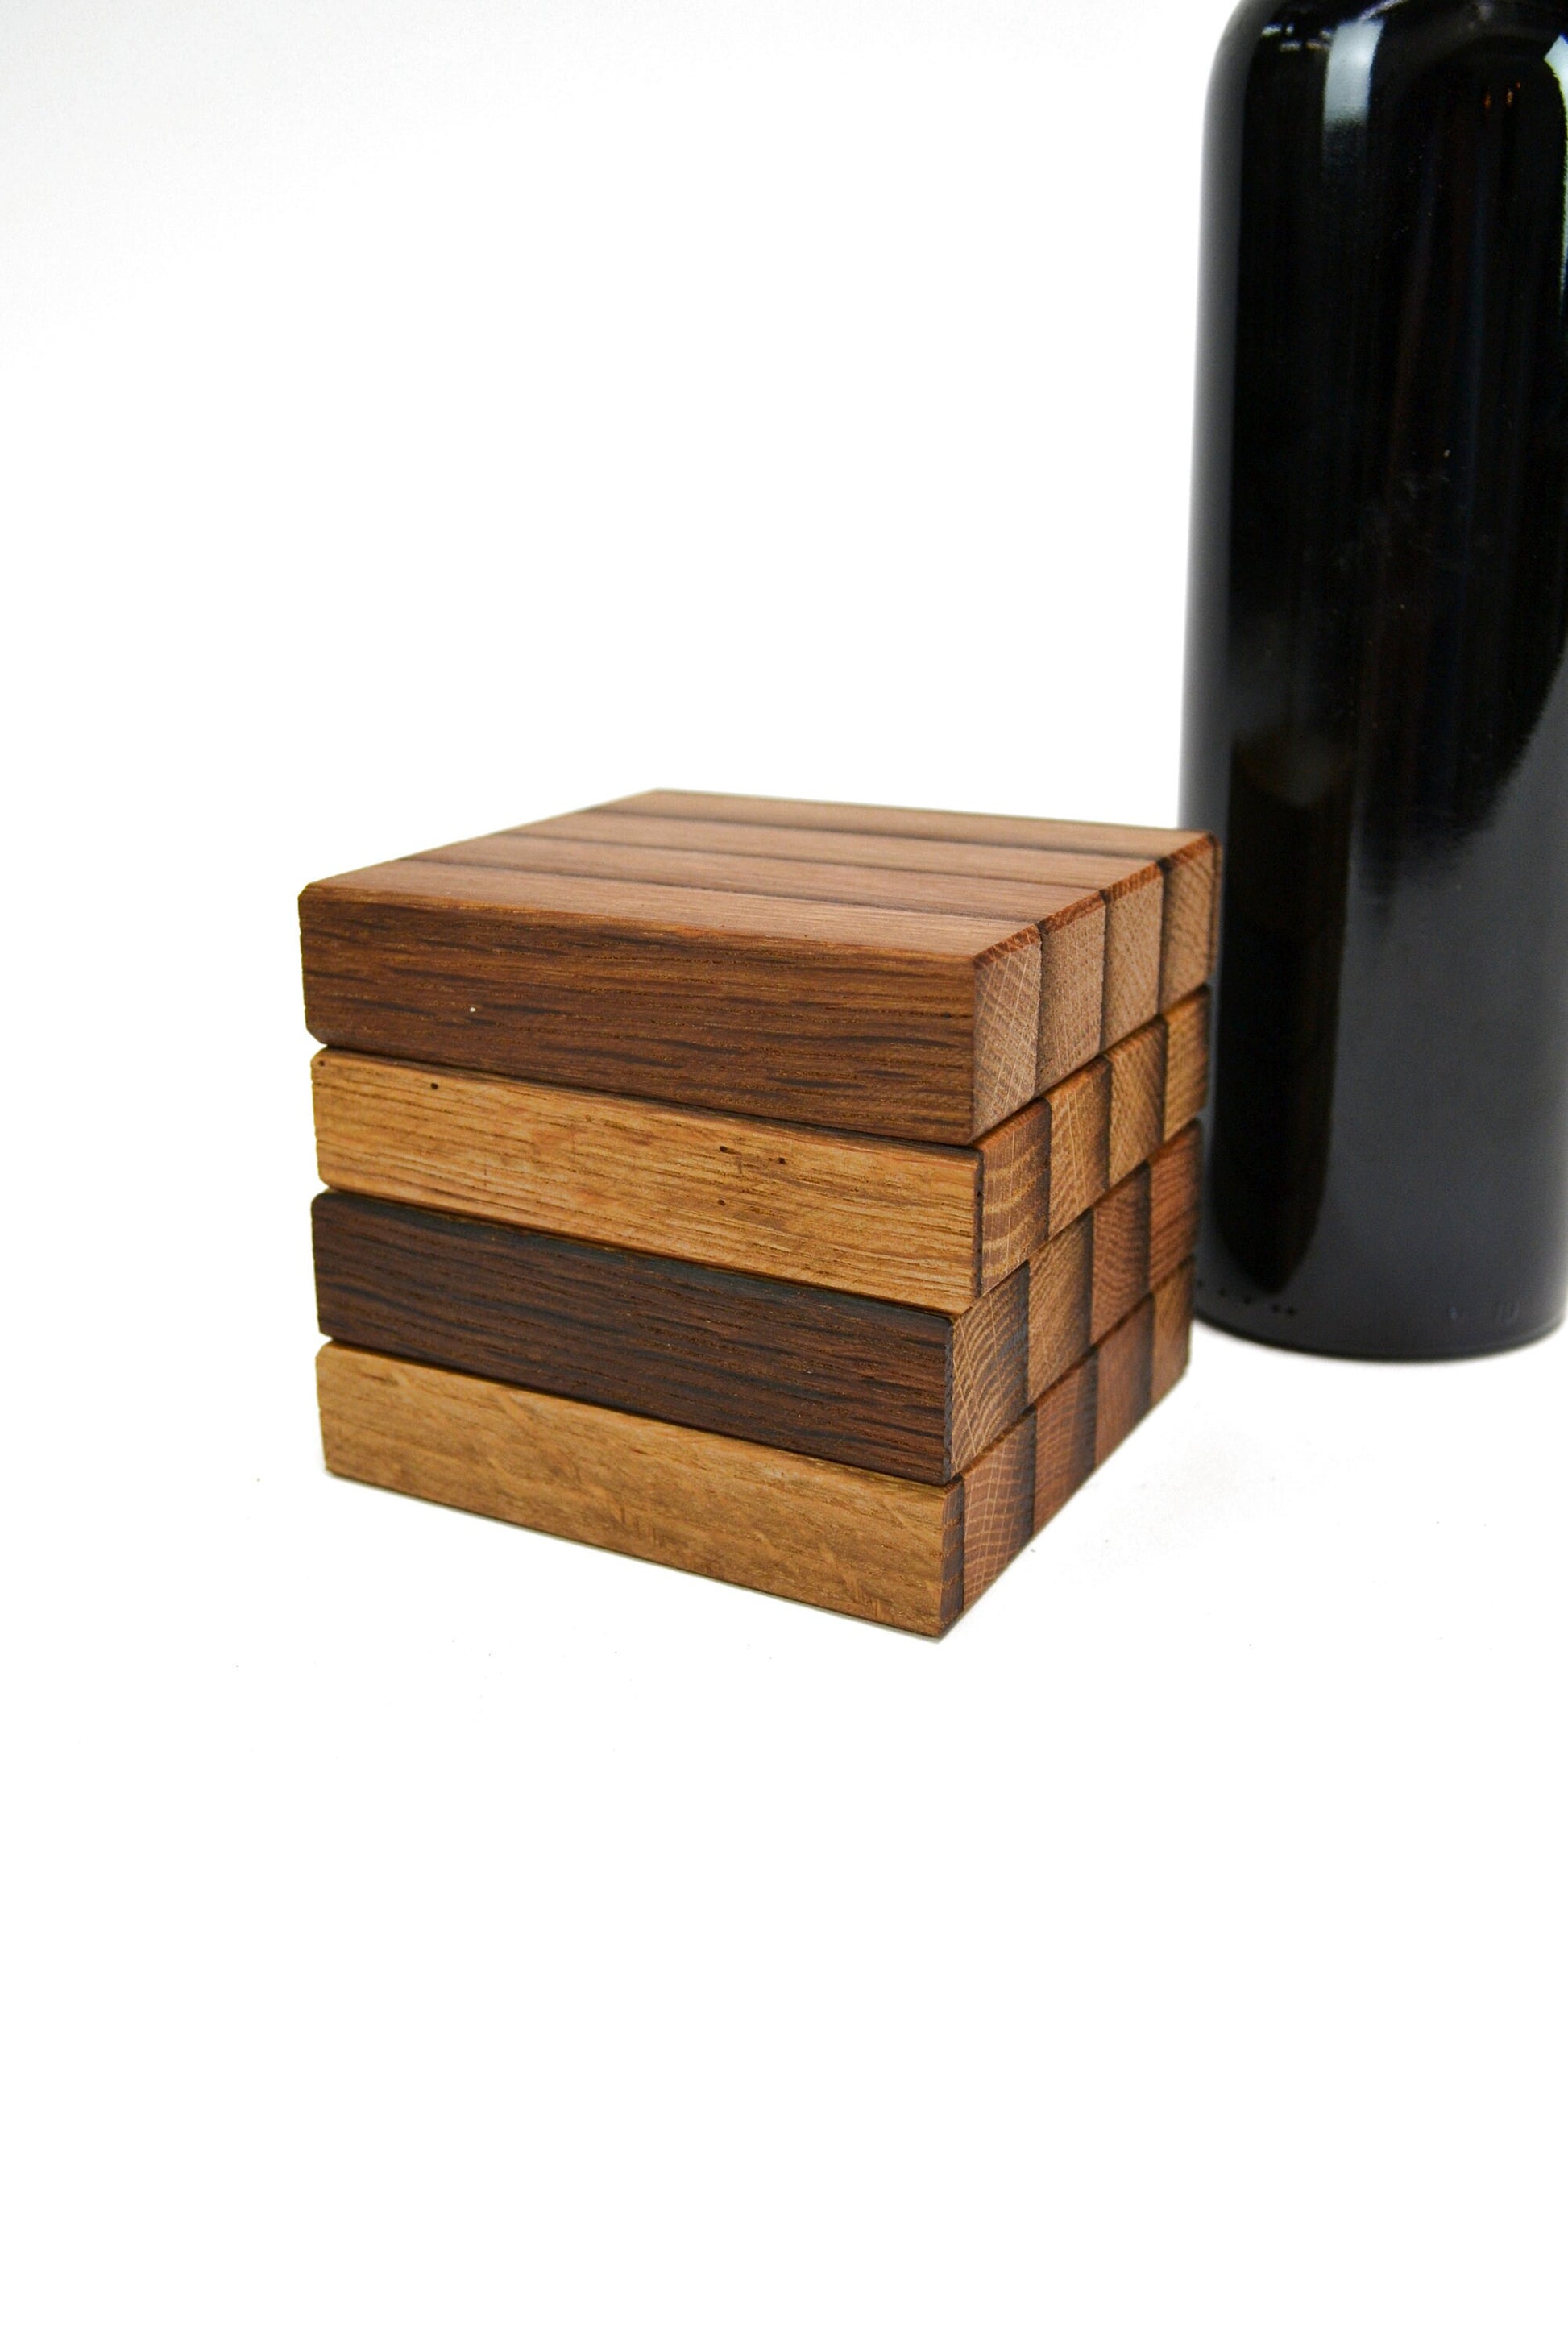 Wine Barrel Coasters - Tabaka - Made from retired California wine barrels - 100% Recycled!